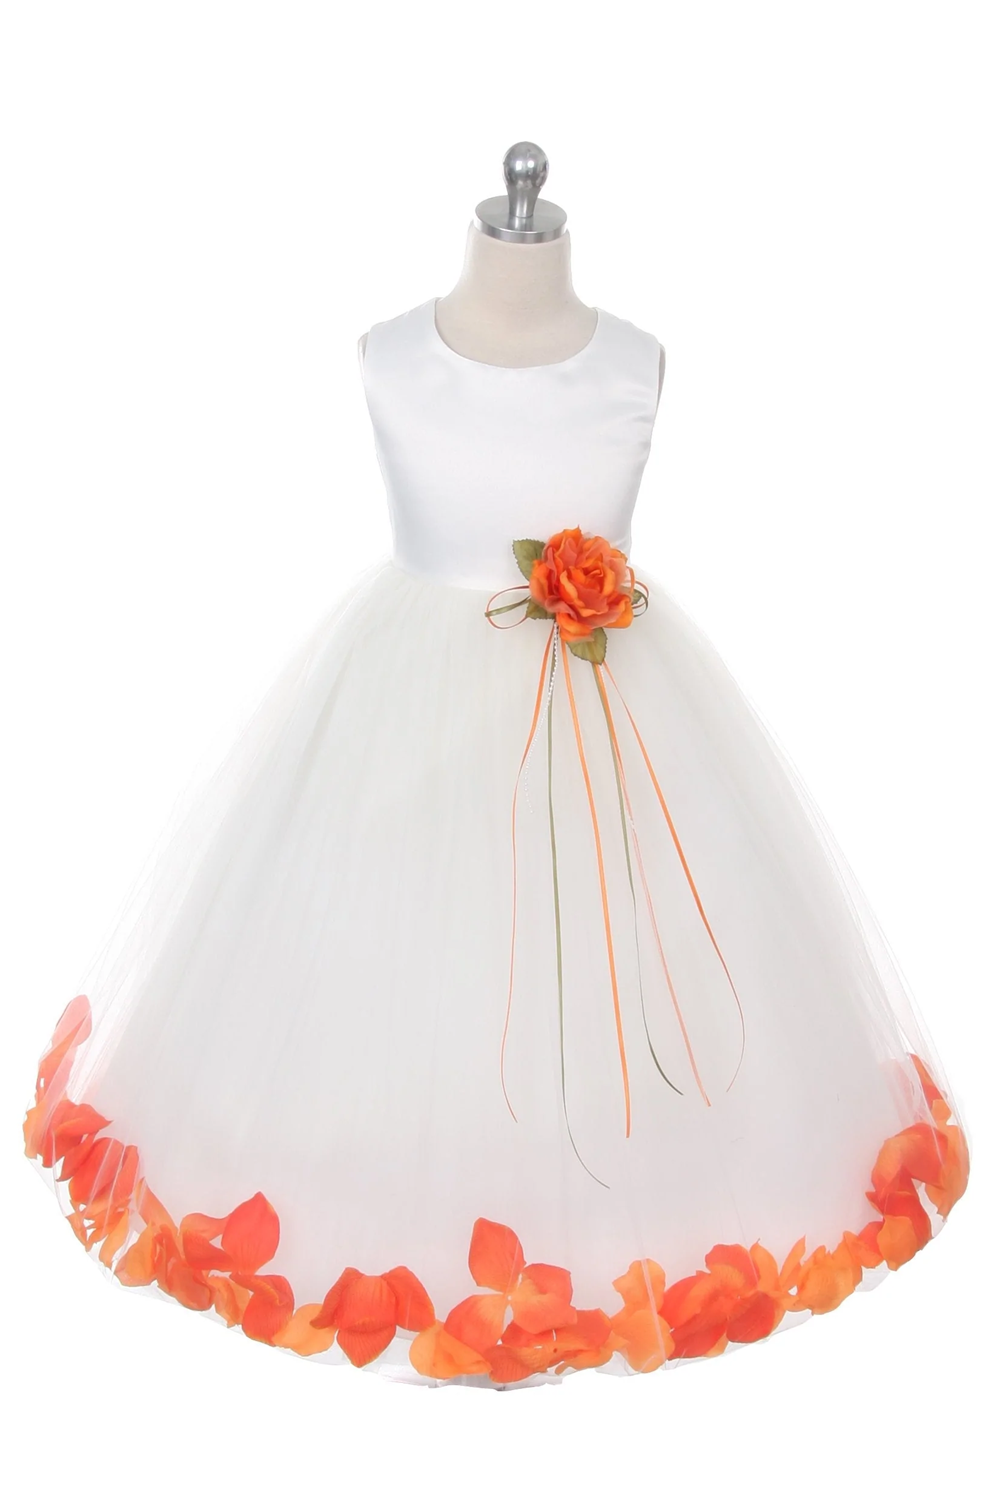 160 b satin flower petal ivory dress (1 of 2 selections)